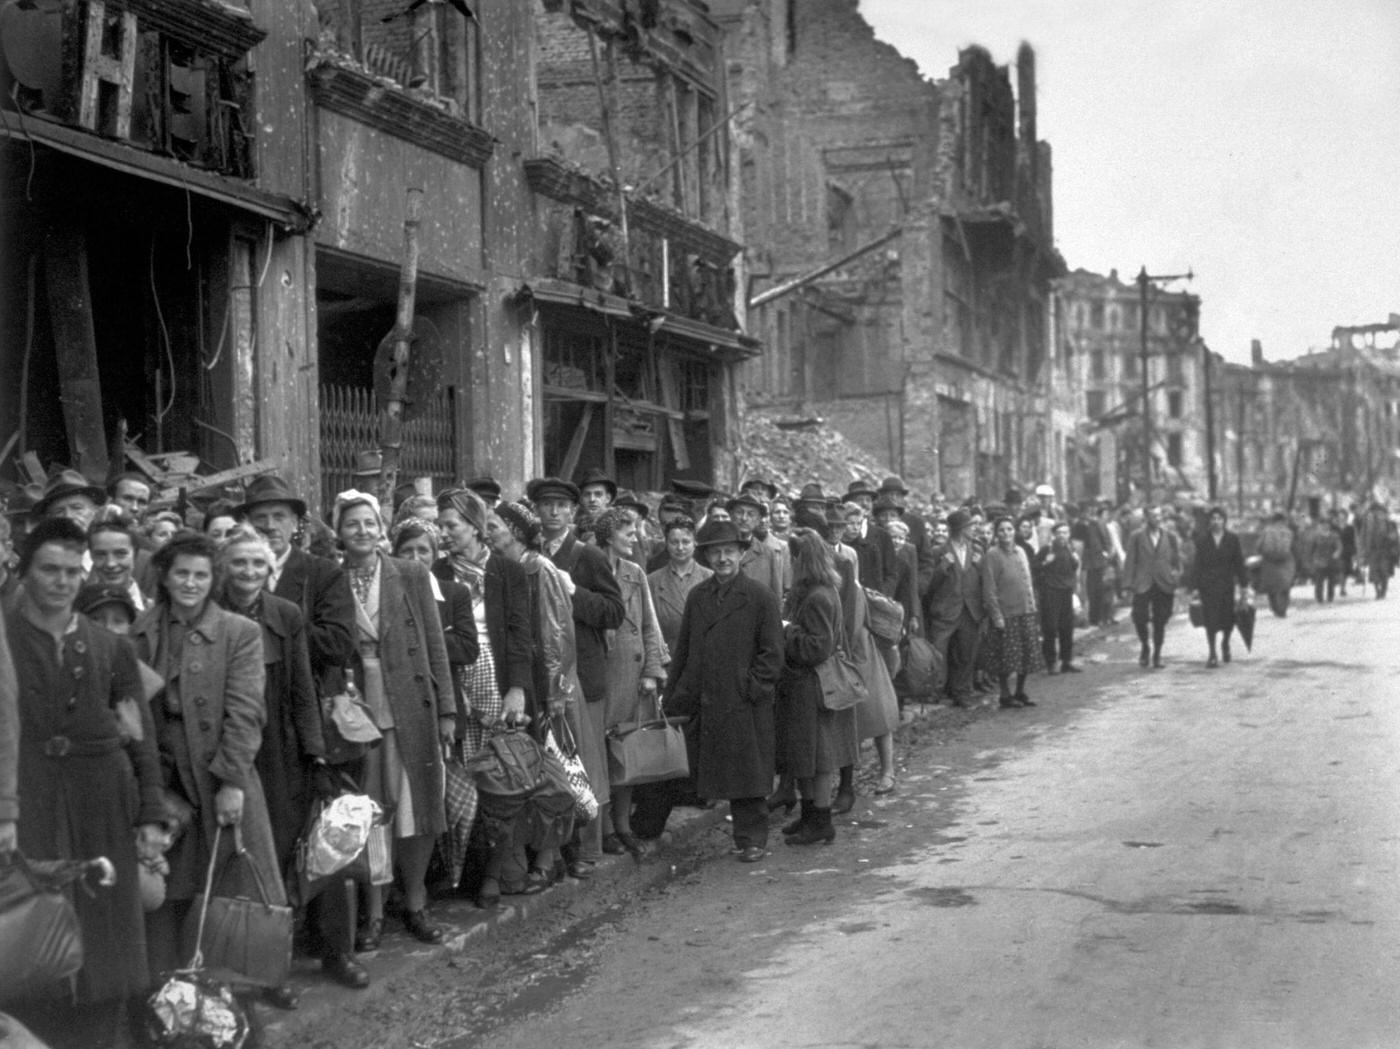 Bus queue in a bomb-damaged street in Berlin, circa 1945.